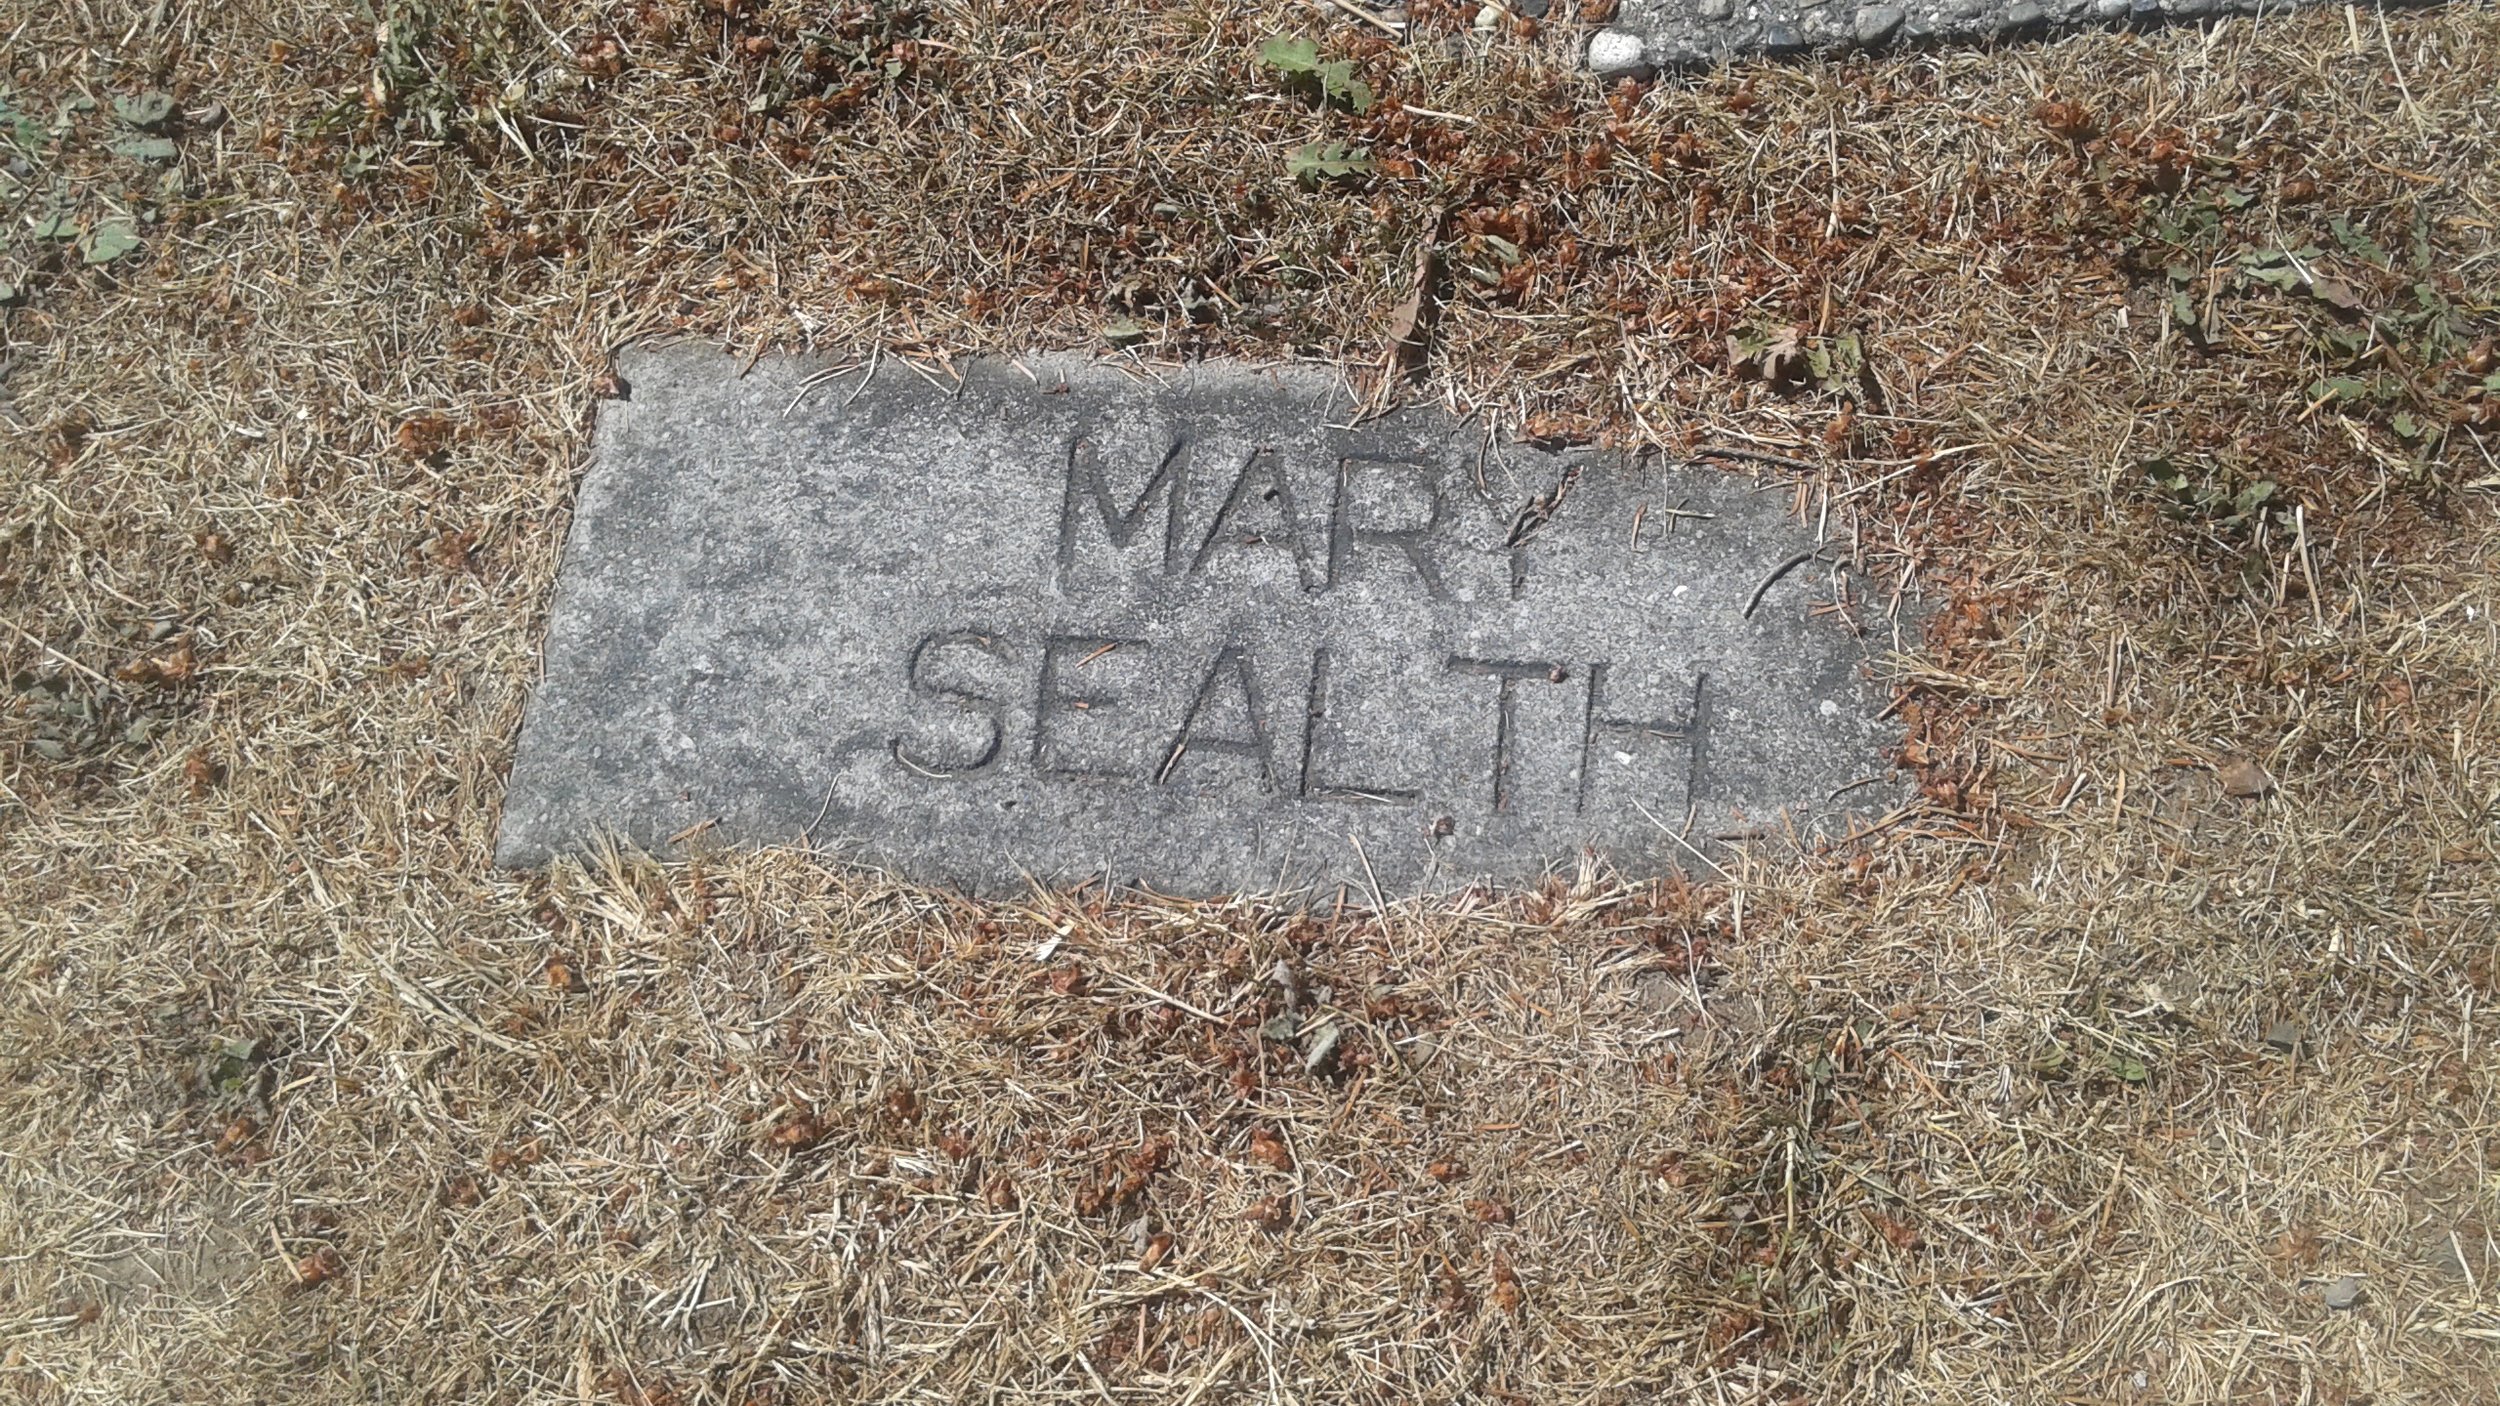 Mary Sealth.jpg